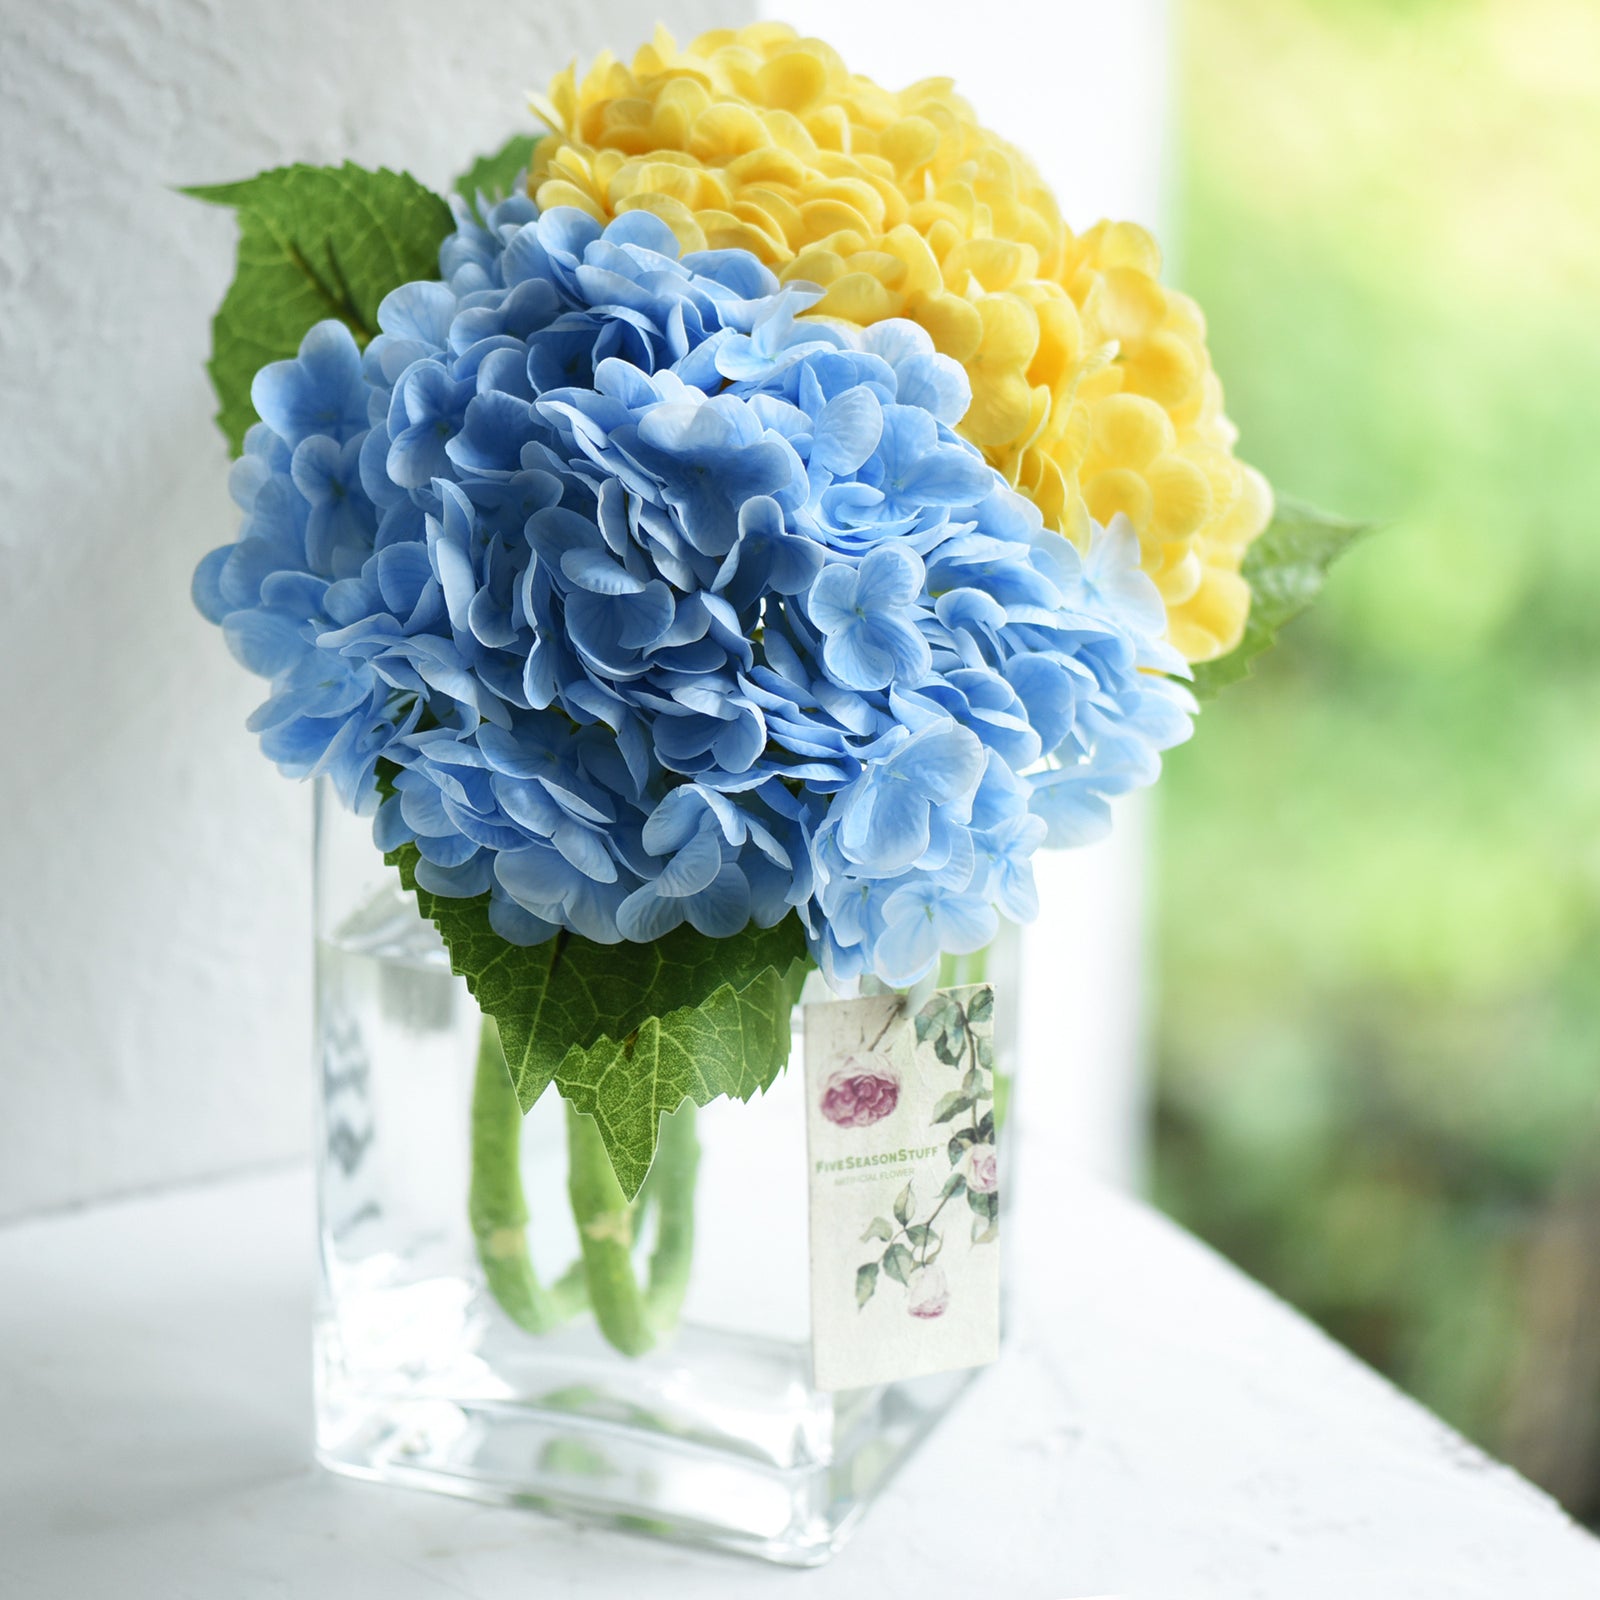 FiveSeasonStuff 2 Stems Real Touch Petals and Leaves Artificial Hydrangea Flowers Long Stem Floral Arrangement | for Wedding Bridal Party Home Décor DIY Floral Decoration (Blue | Yellow)